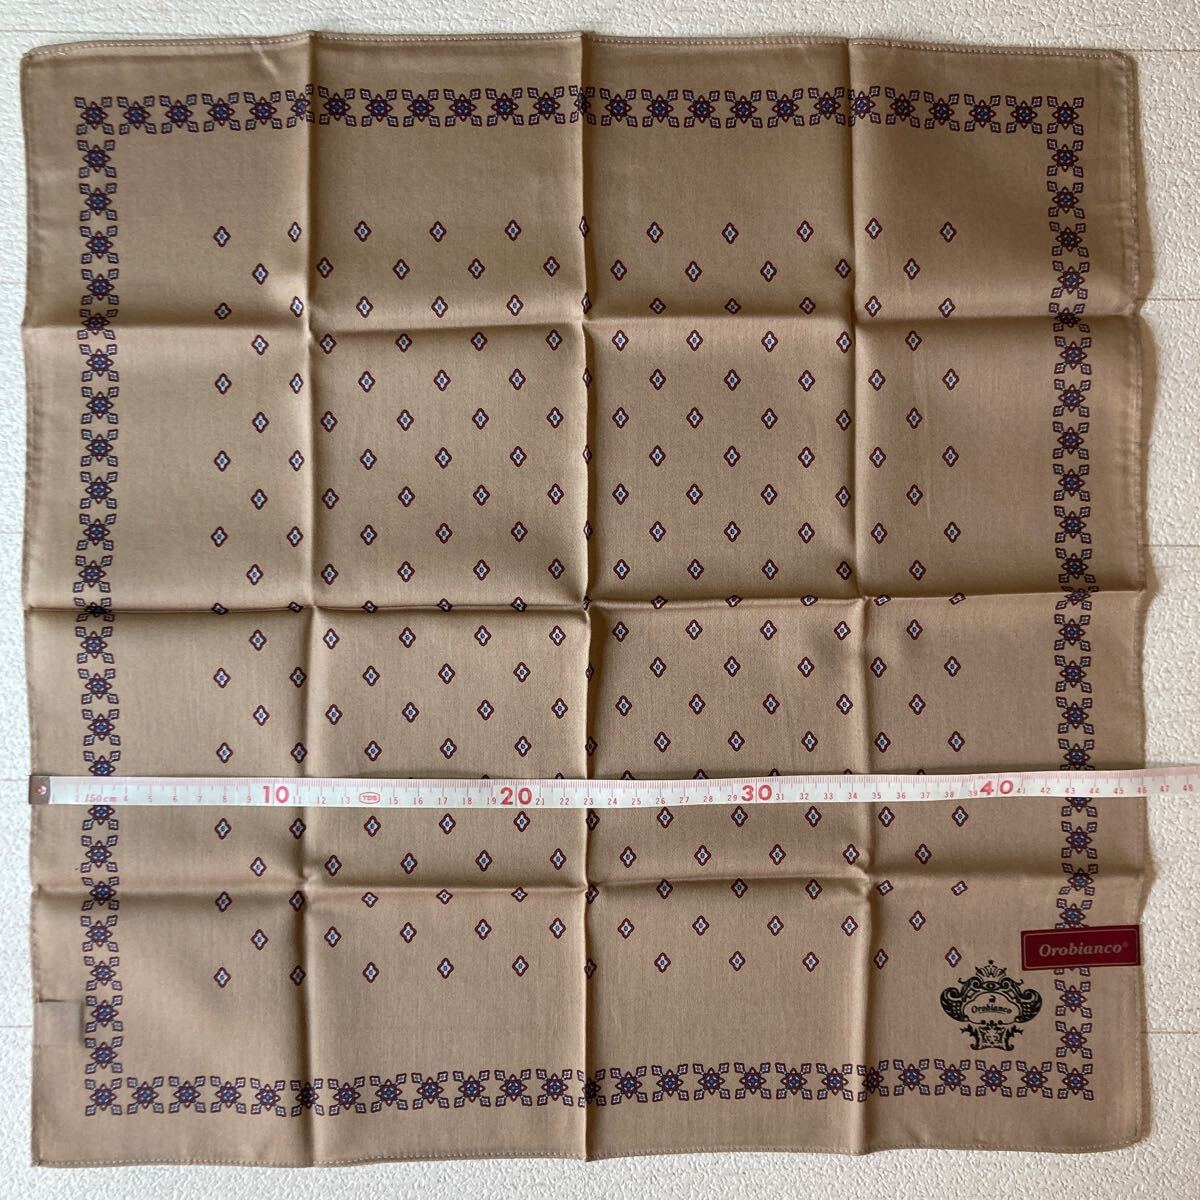  unused Orobianco handkerchie 3 sheets summarize Brown gray navy 04020601